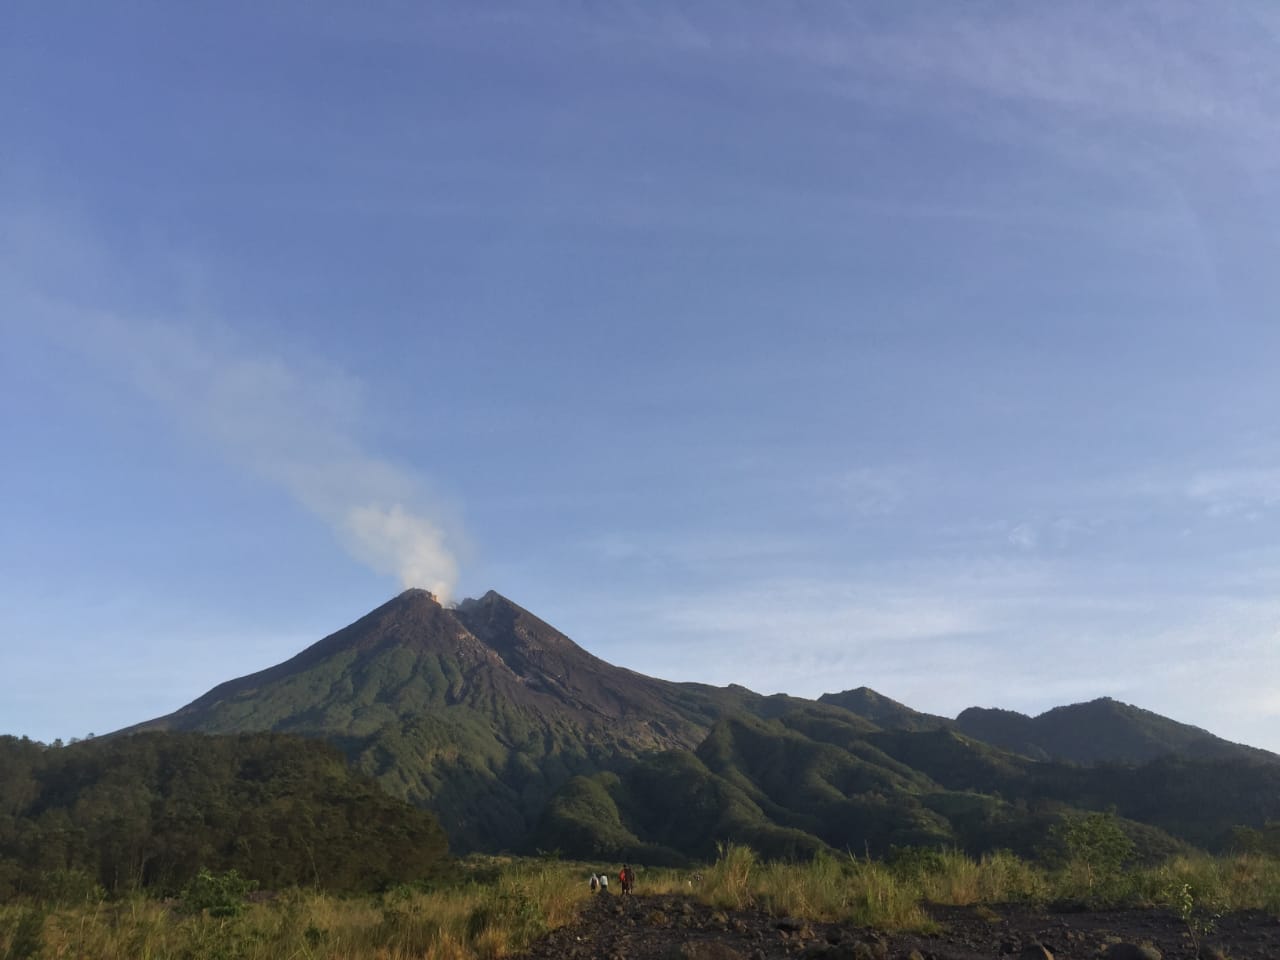 2010 Merapi eruption biggest one in last century: Agency